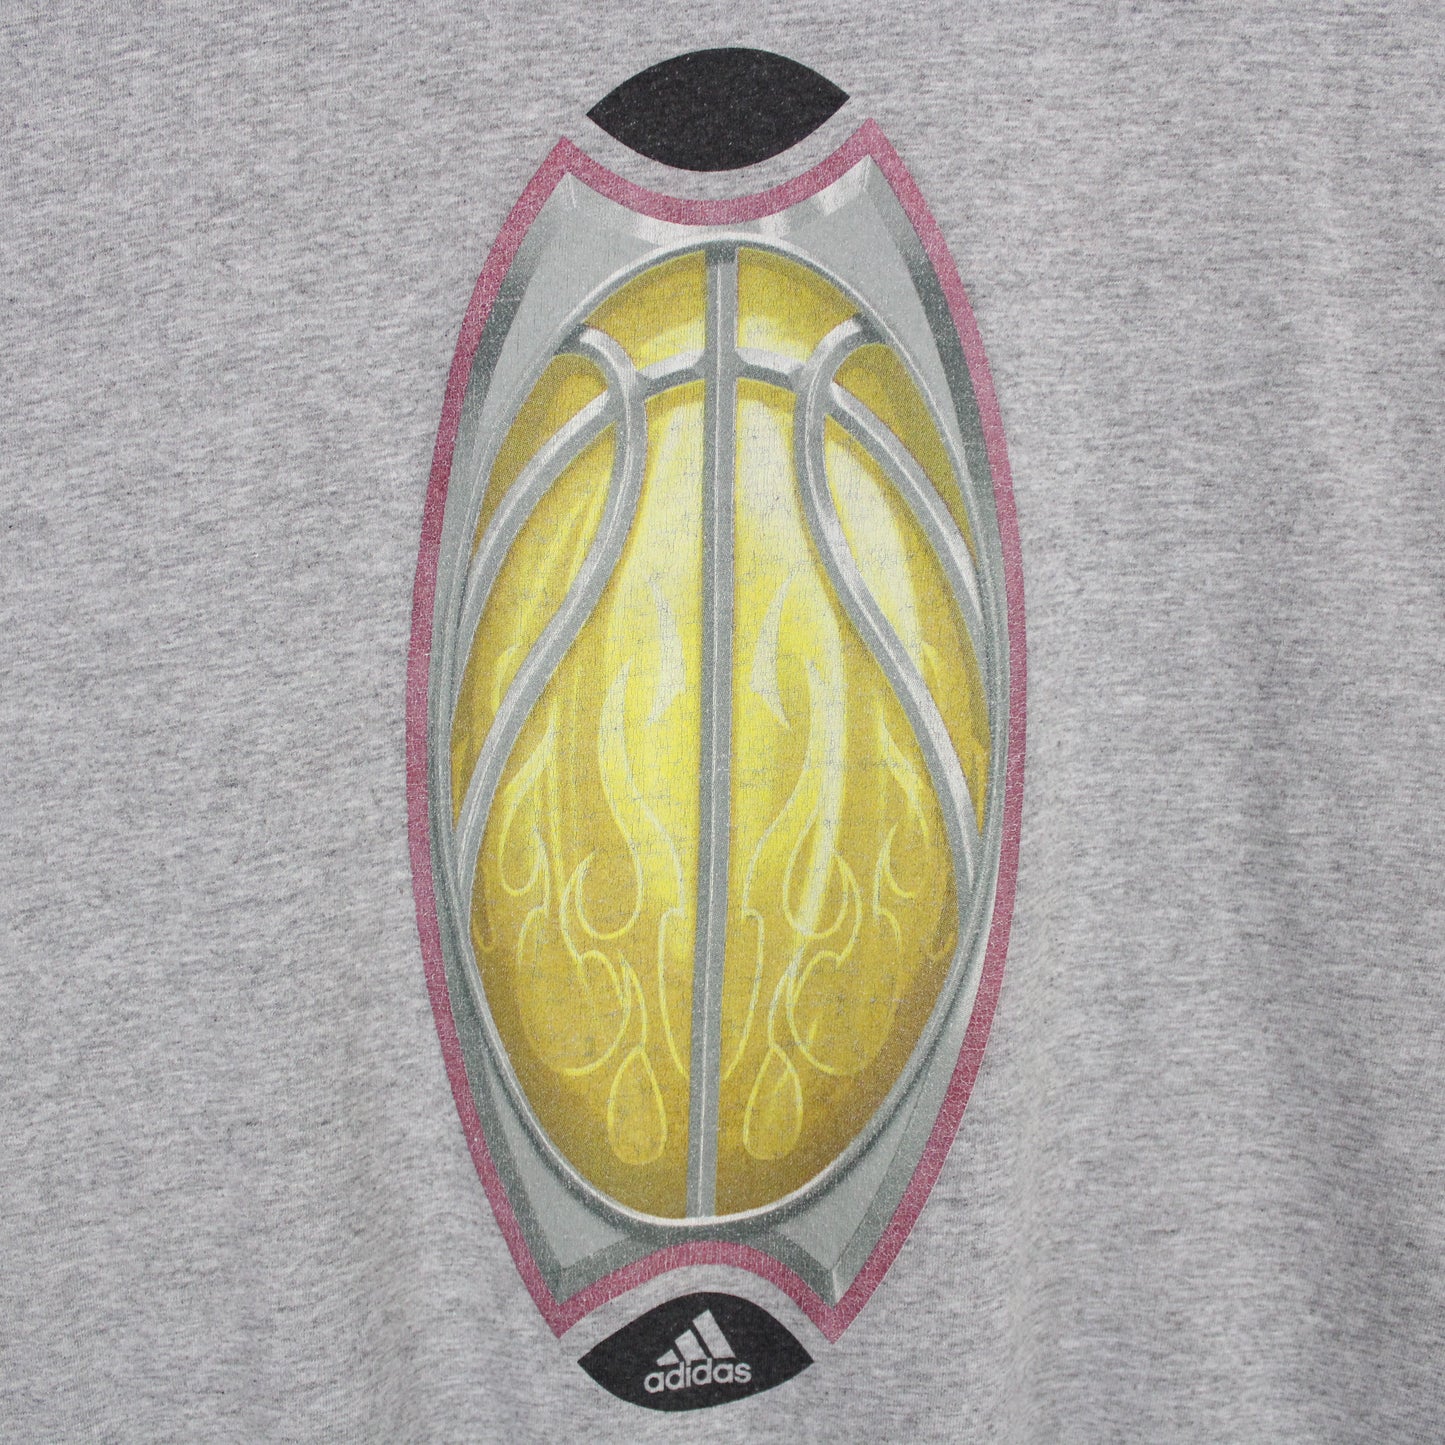 Vintage Adidas Basketball Tee - XXL